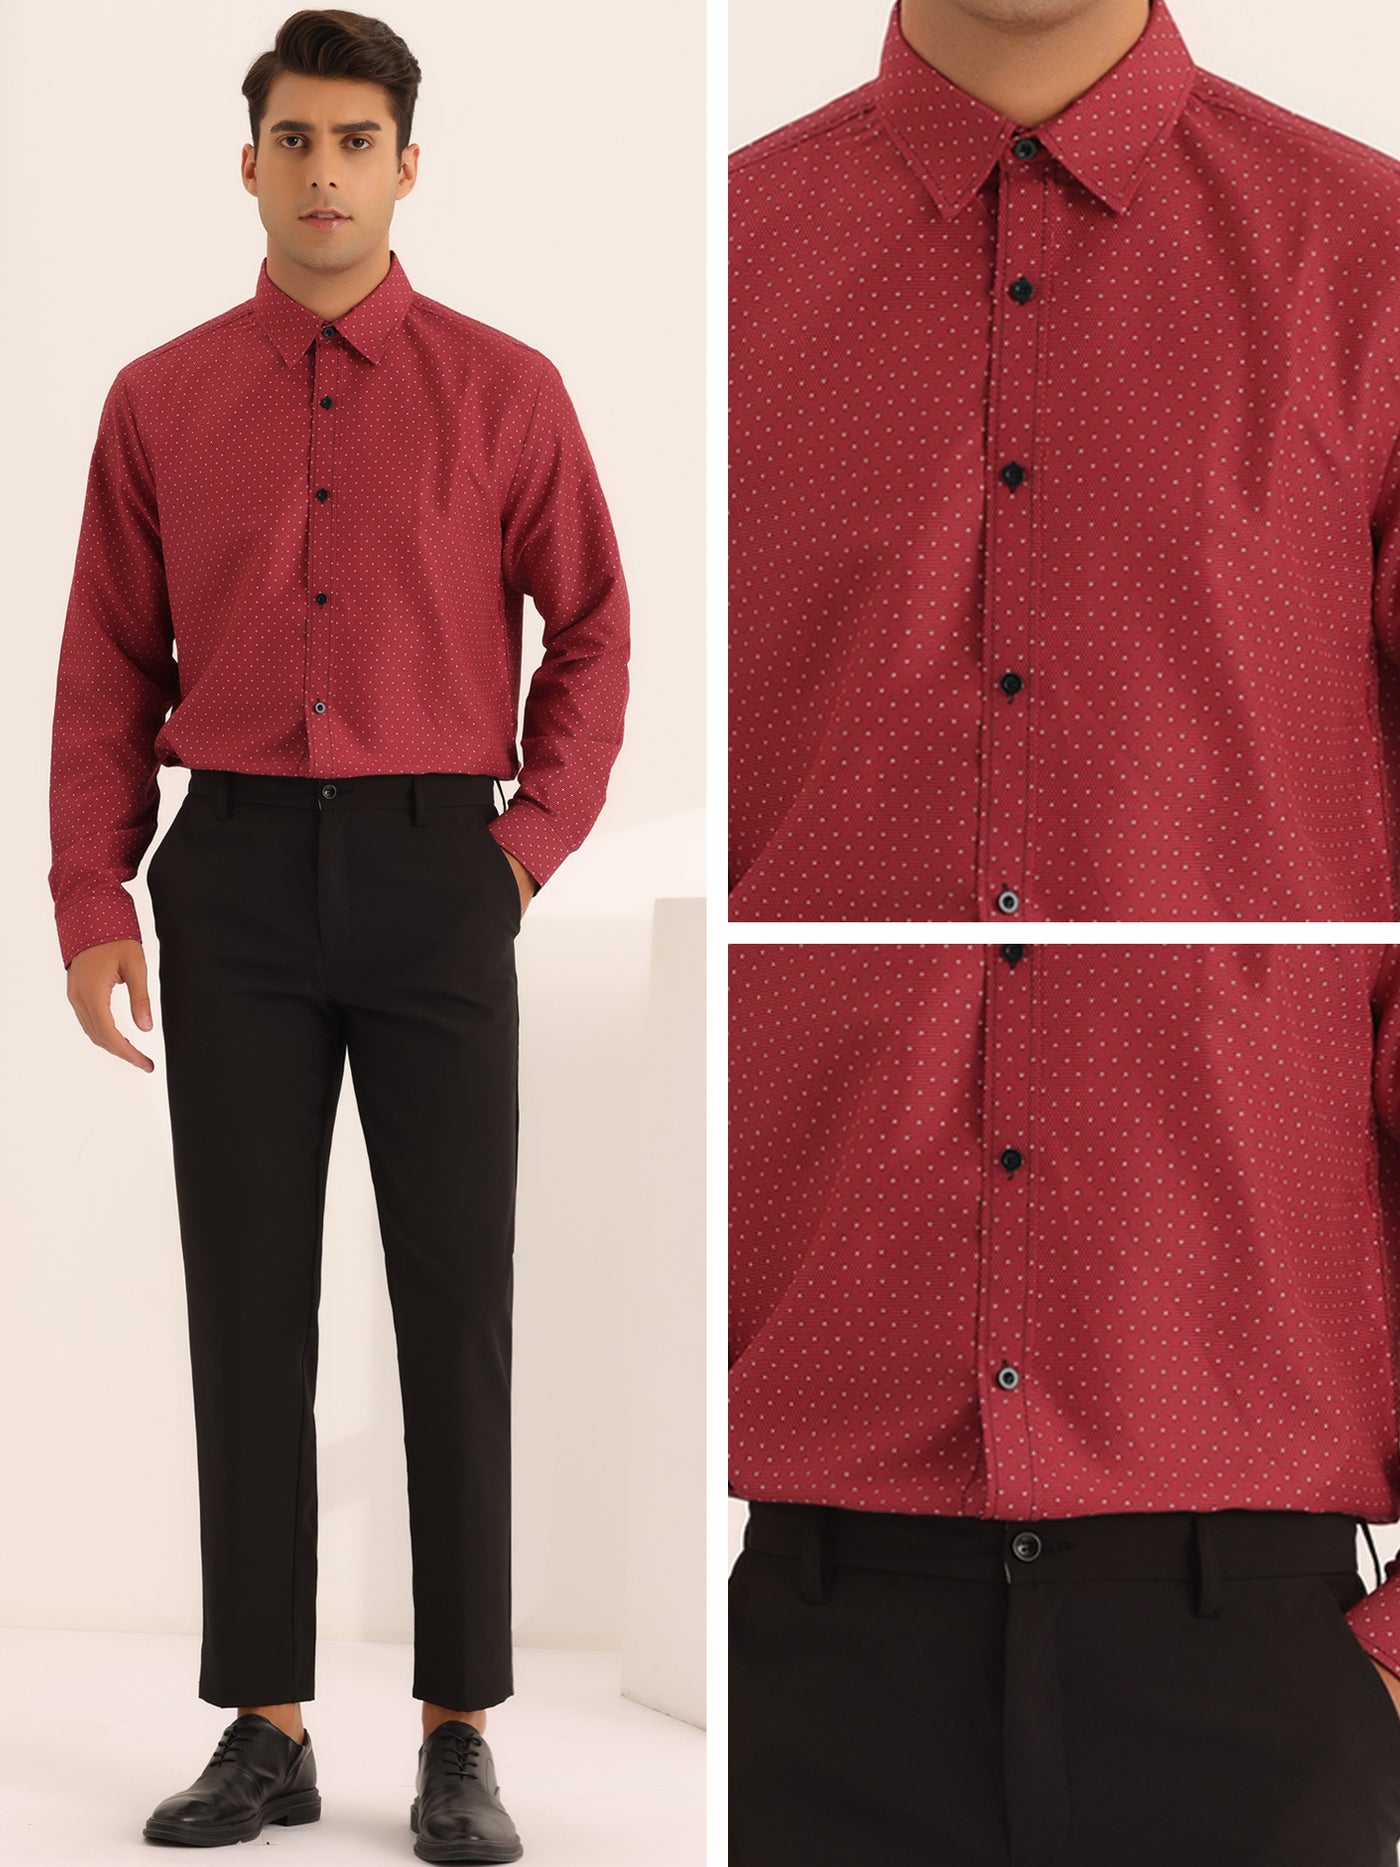 Bublédon Men's Polka Dots Long Sleeve Button Down Printed Formal Dress Shirts